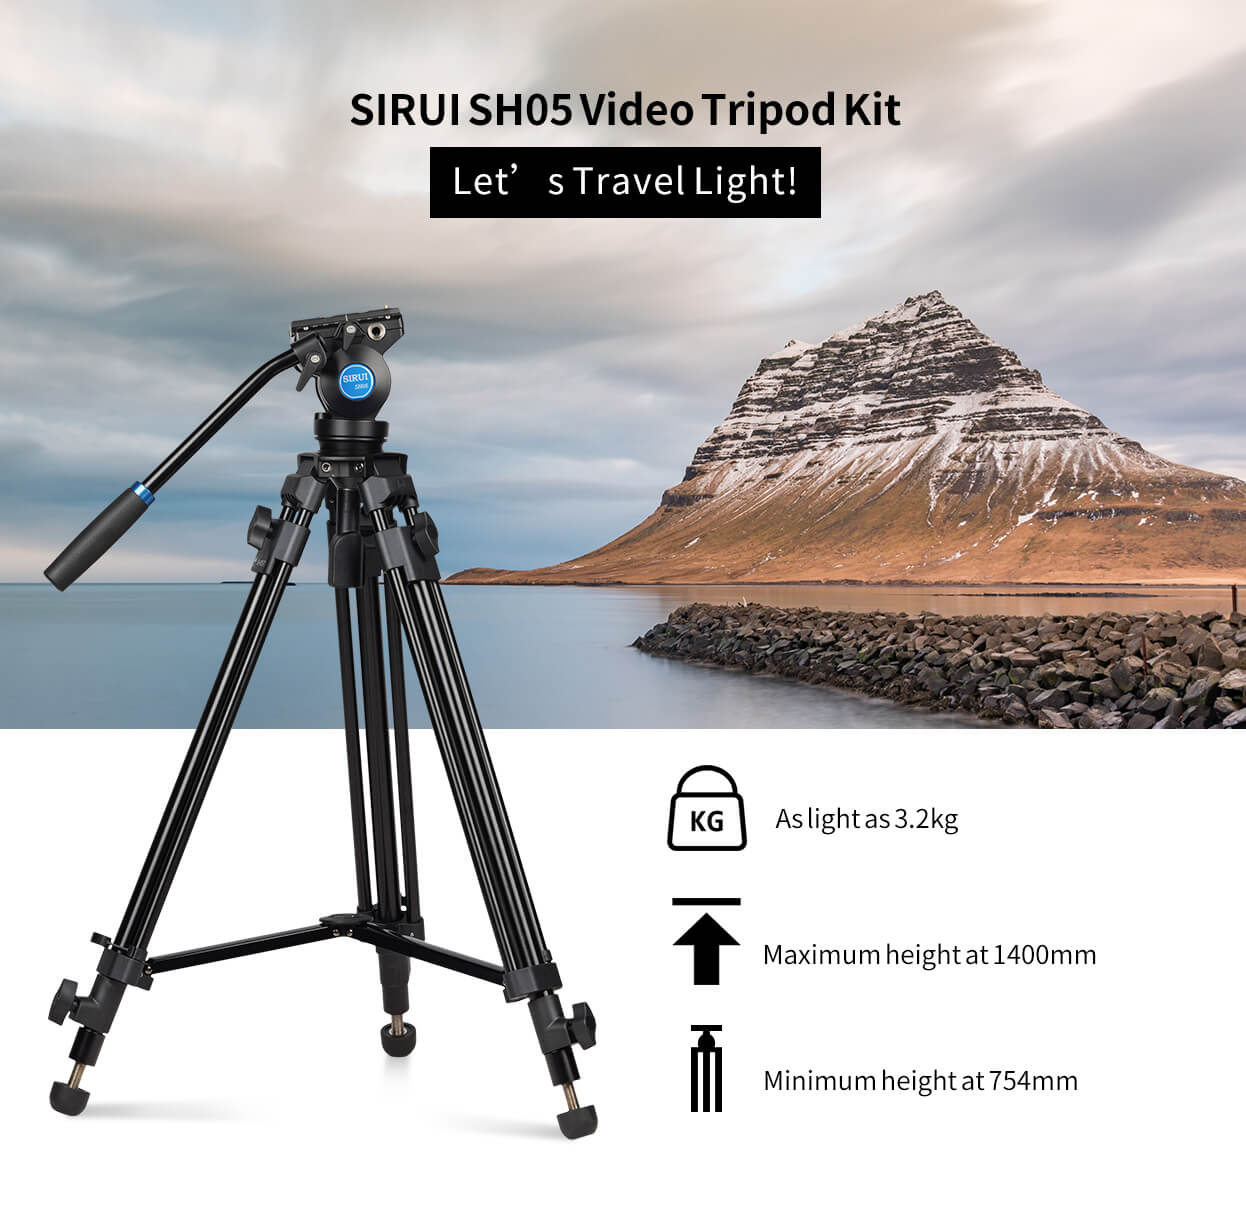 SIRUI SH05 Video Tripod Kit